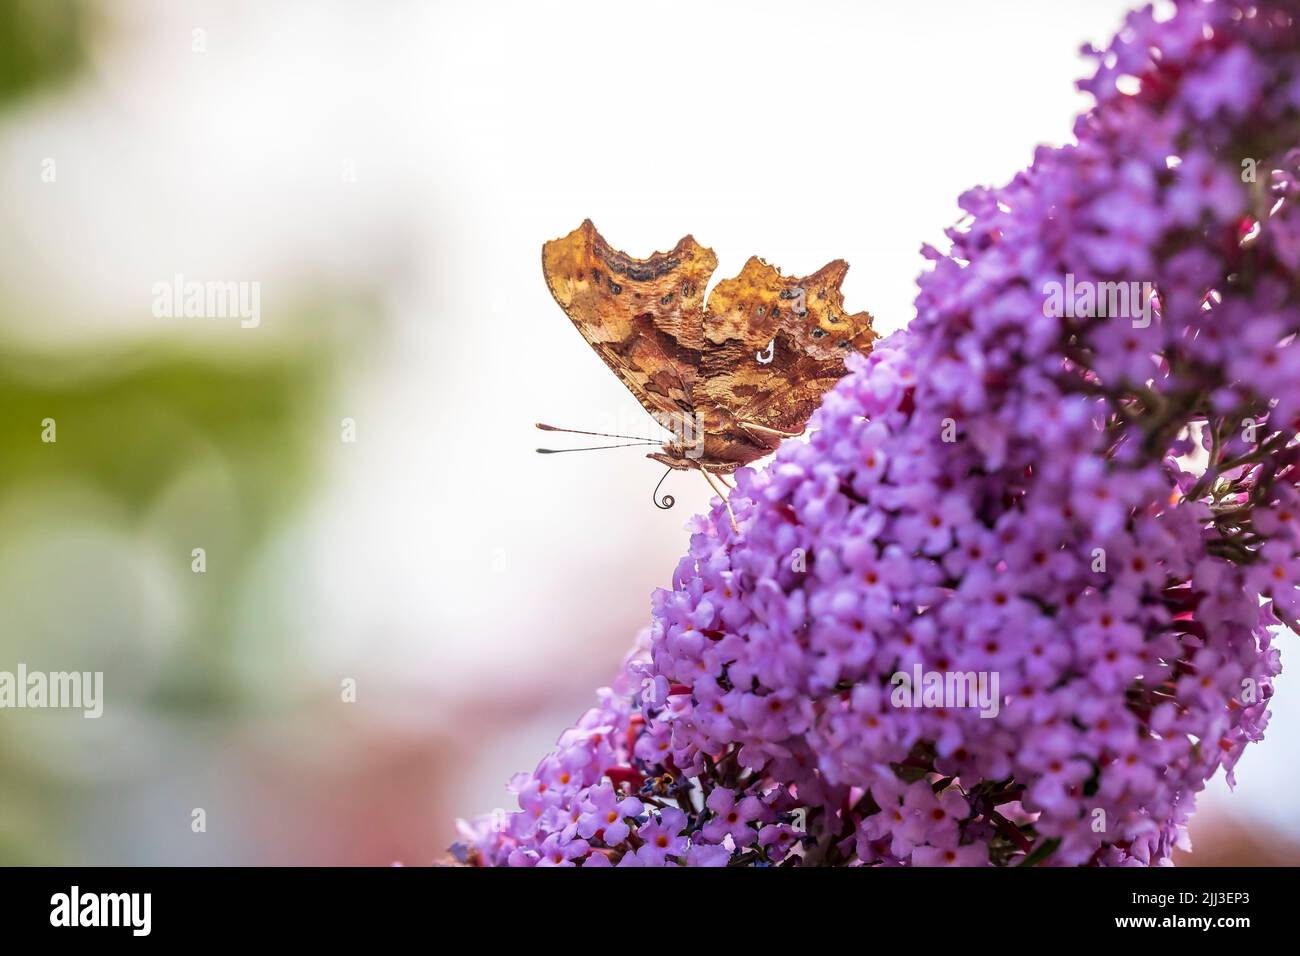 Coma mariposa Polygonia c-album polinizando y alimentándose de buddleja flores púrpura Foto de stock